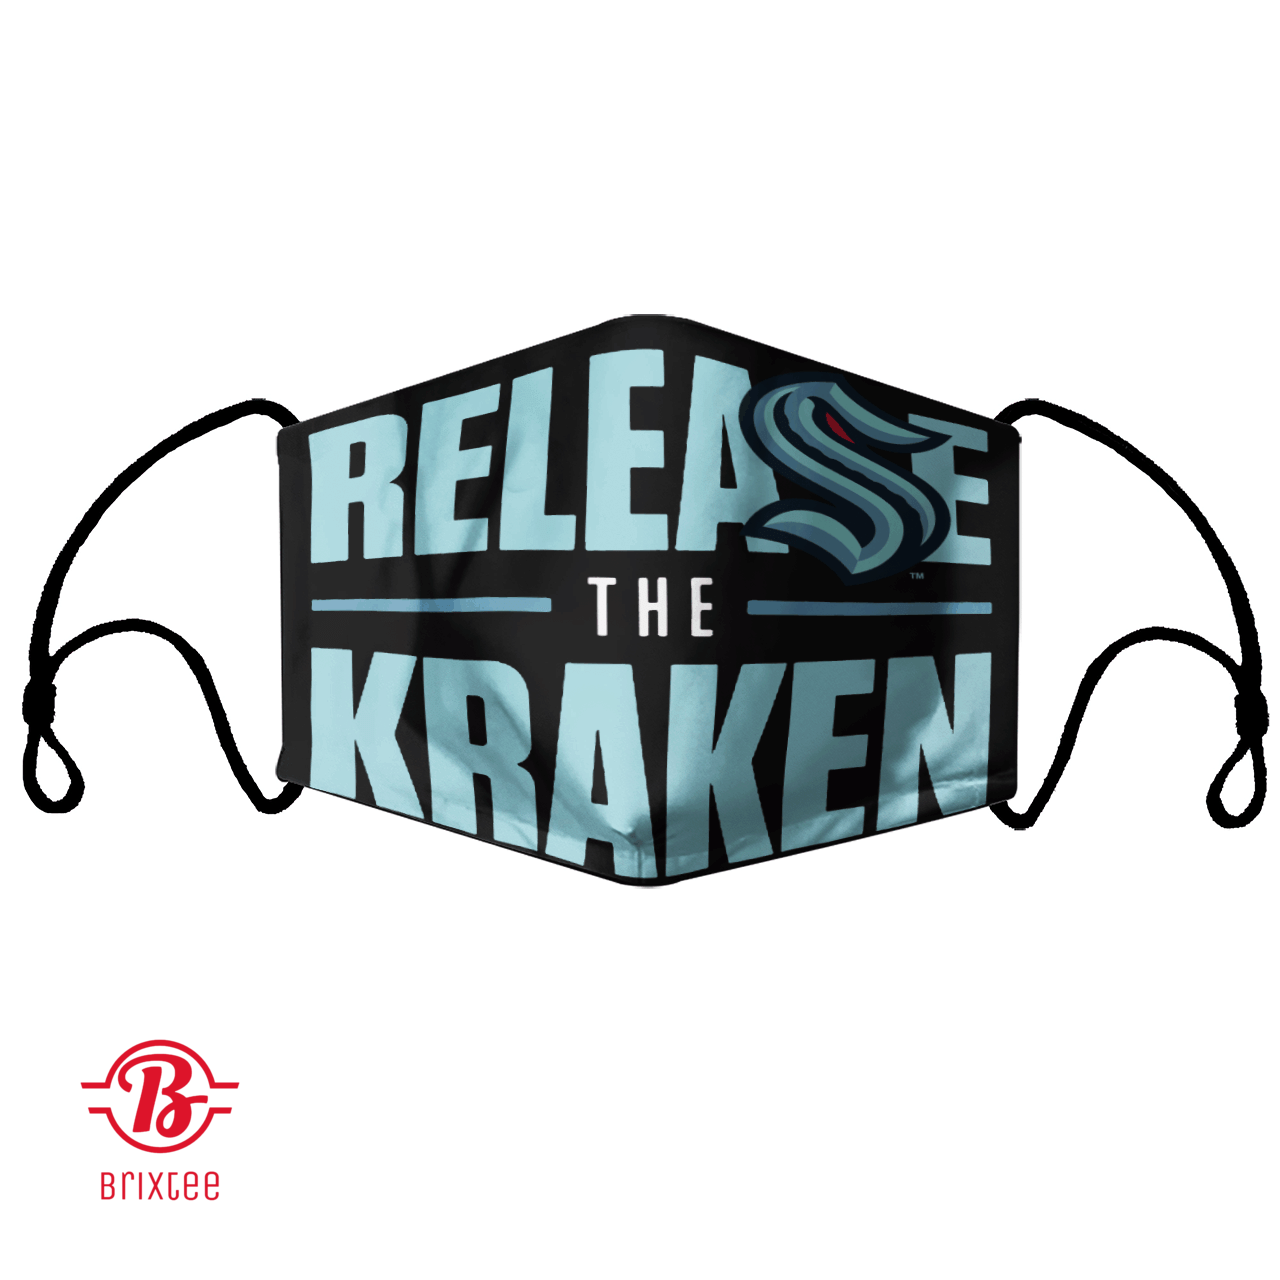 Release The Kraken - Seattle Kraken